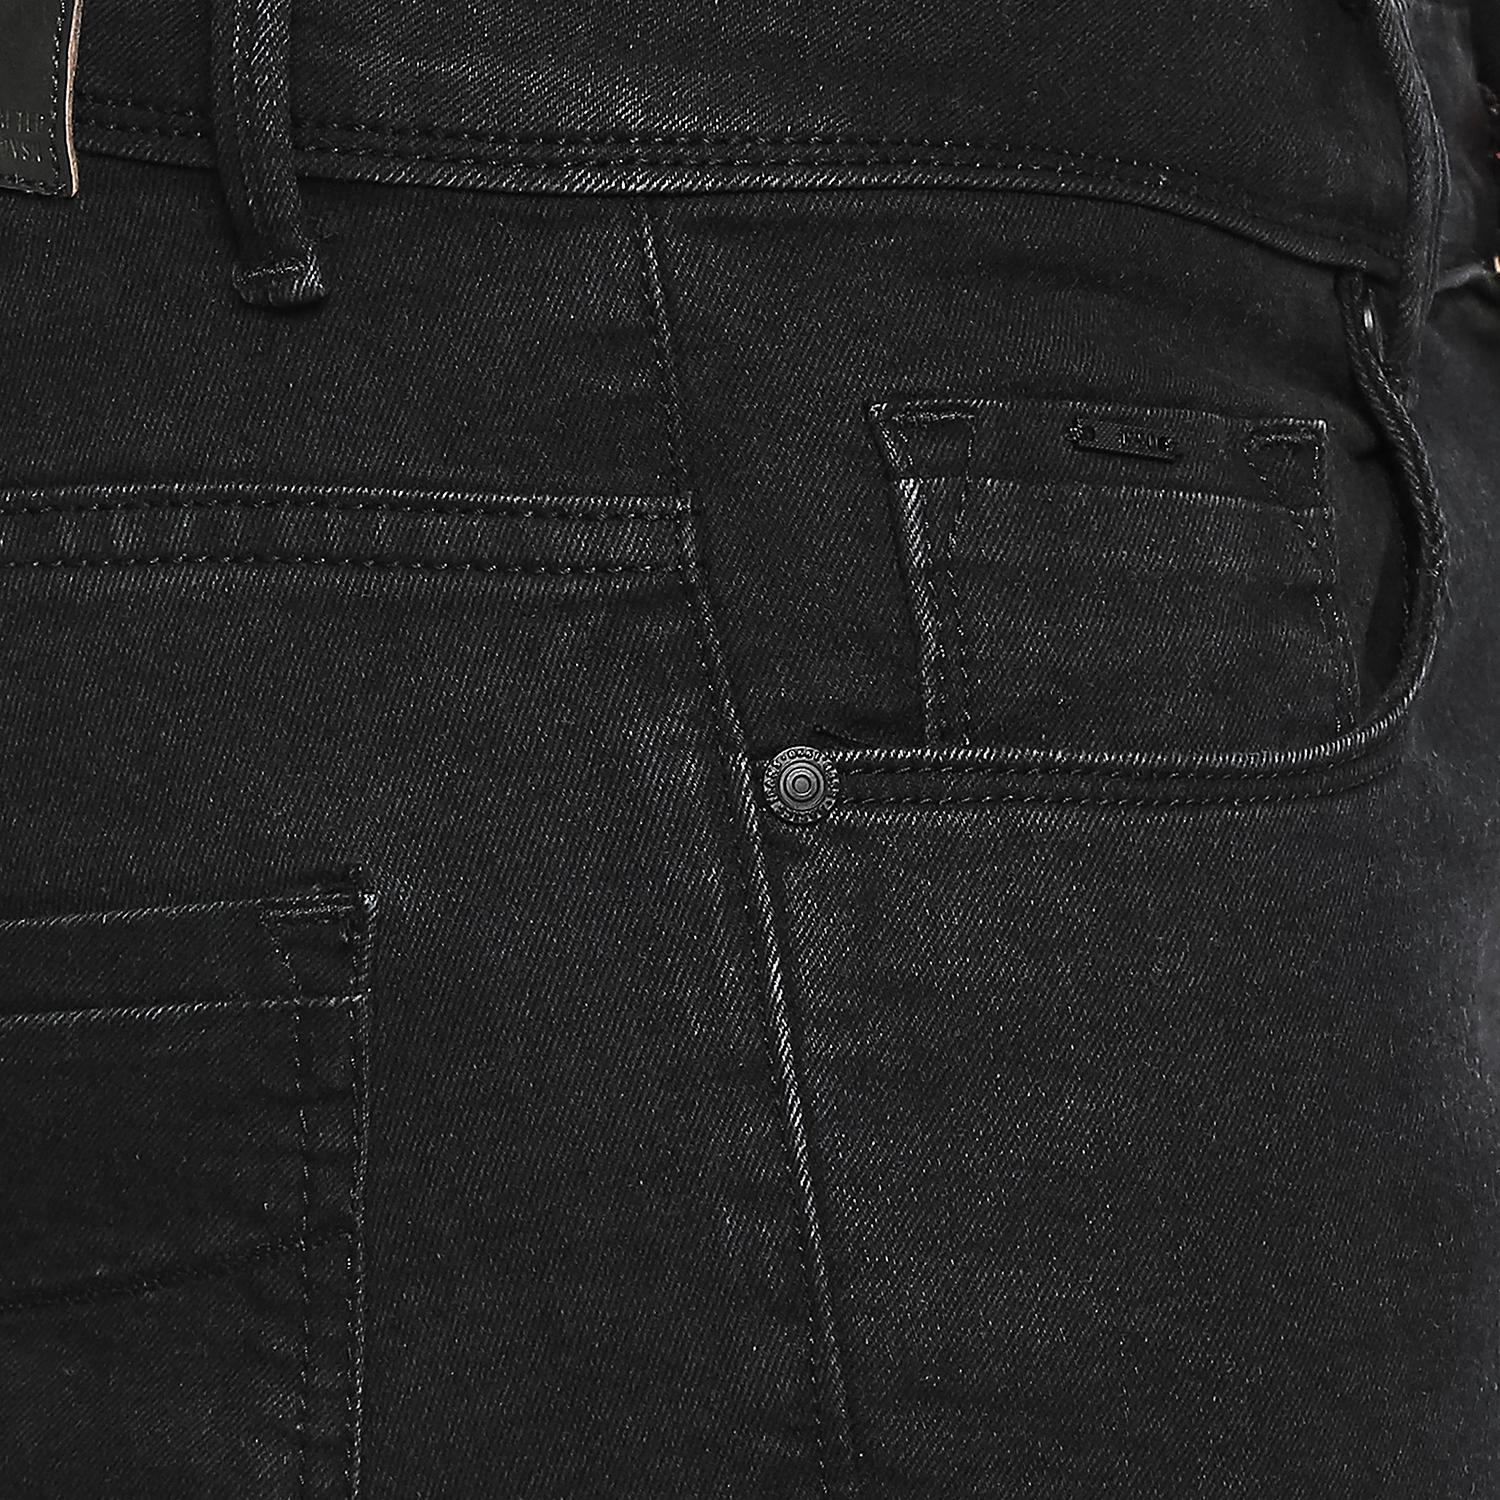 Basics | Men's Black Cotton Blend Solid Jeans 3